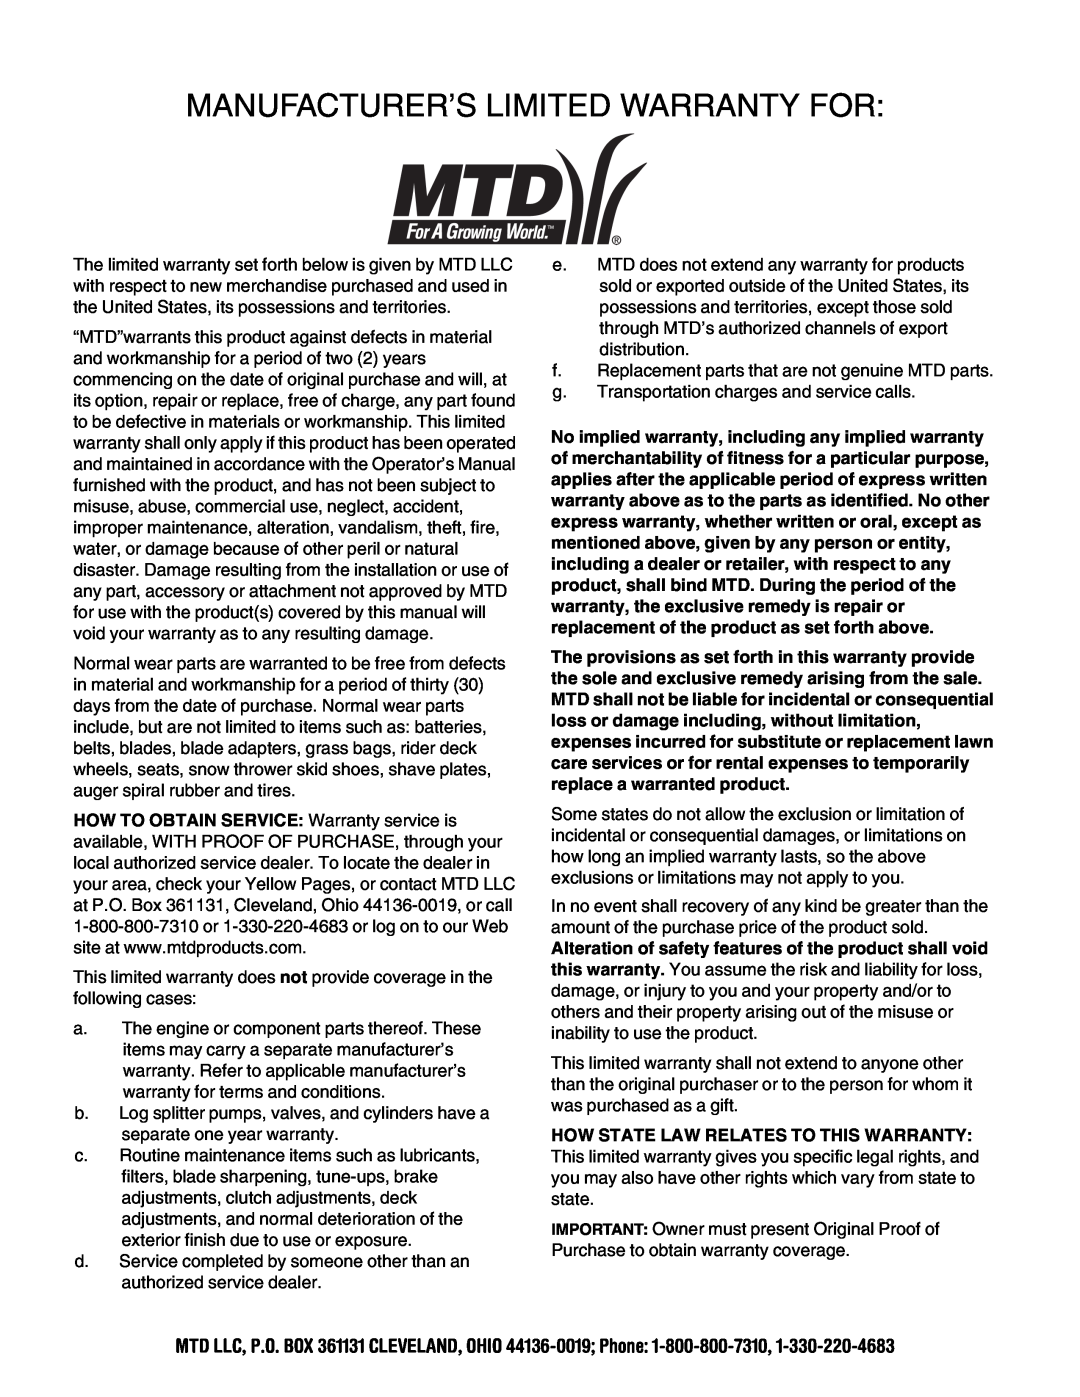 MTD 454 manual Manufacturer’S Limited Warranty For 